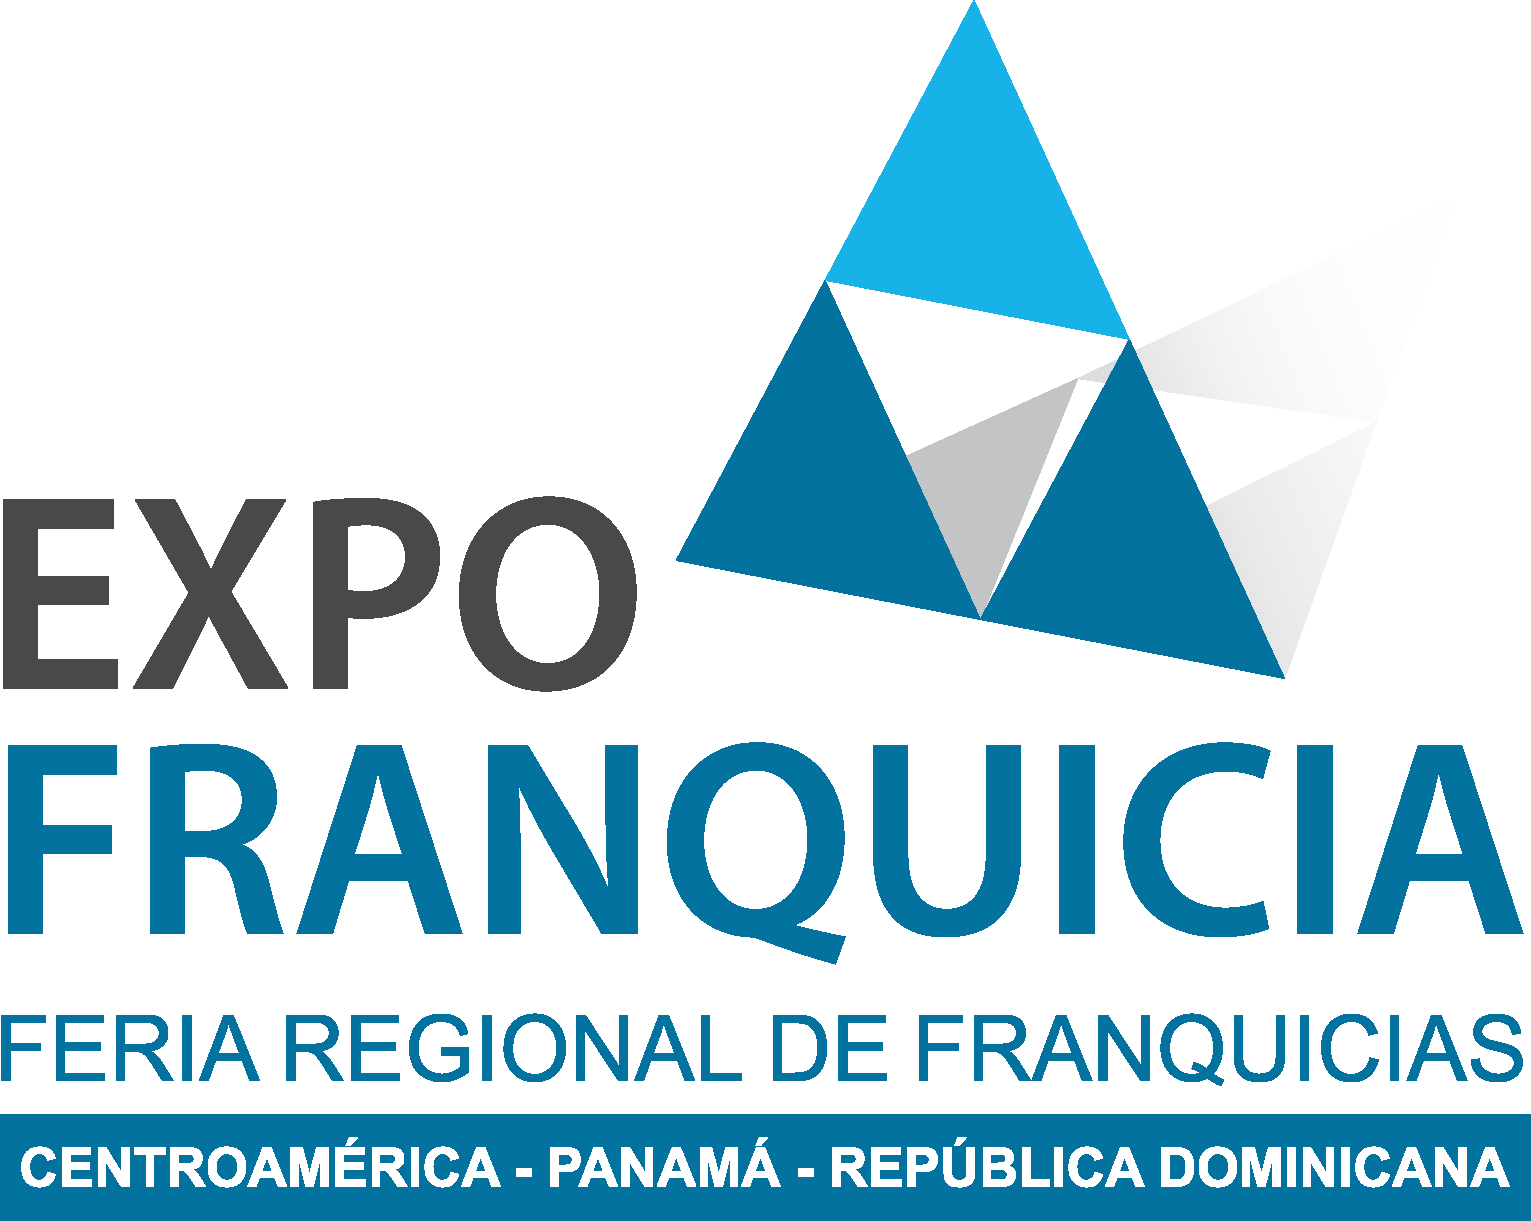 EXPO FRANQUICIA